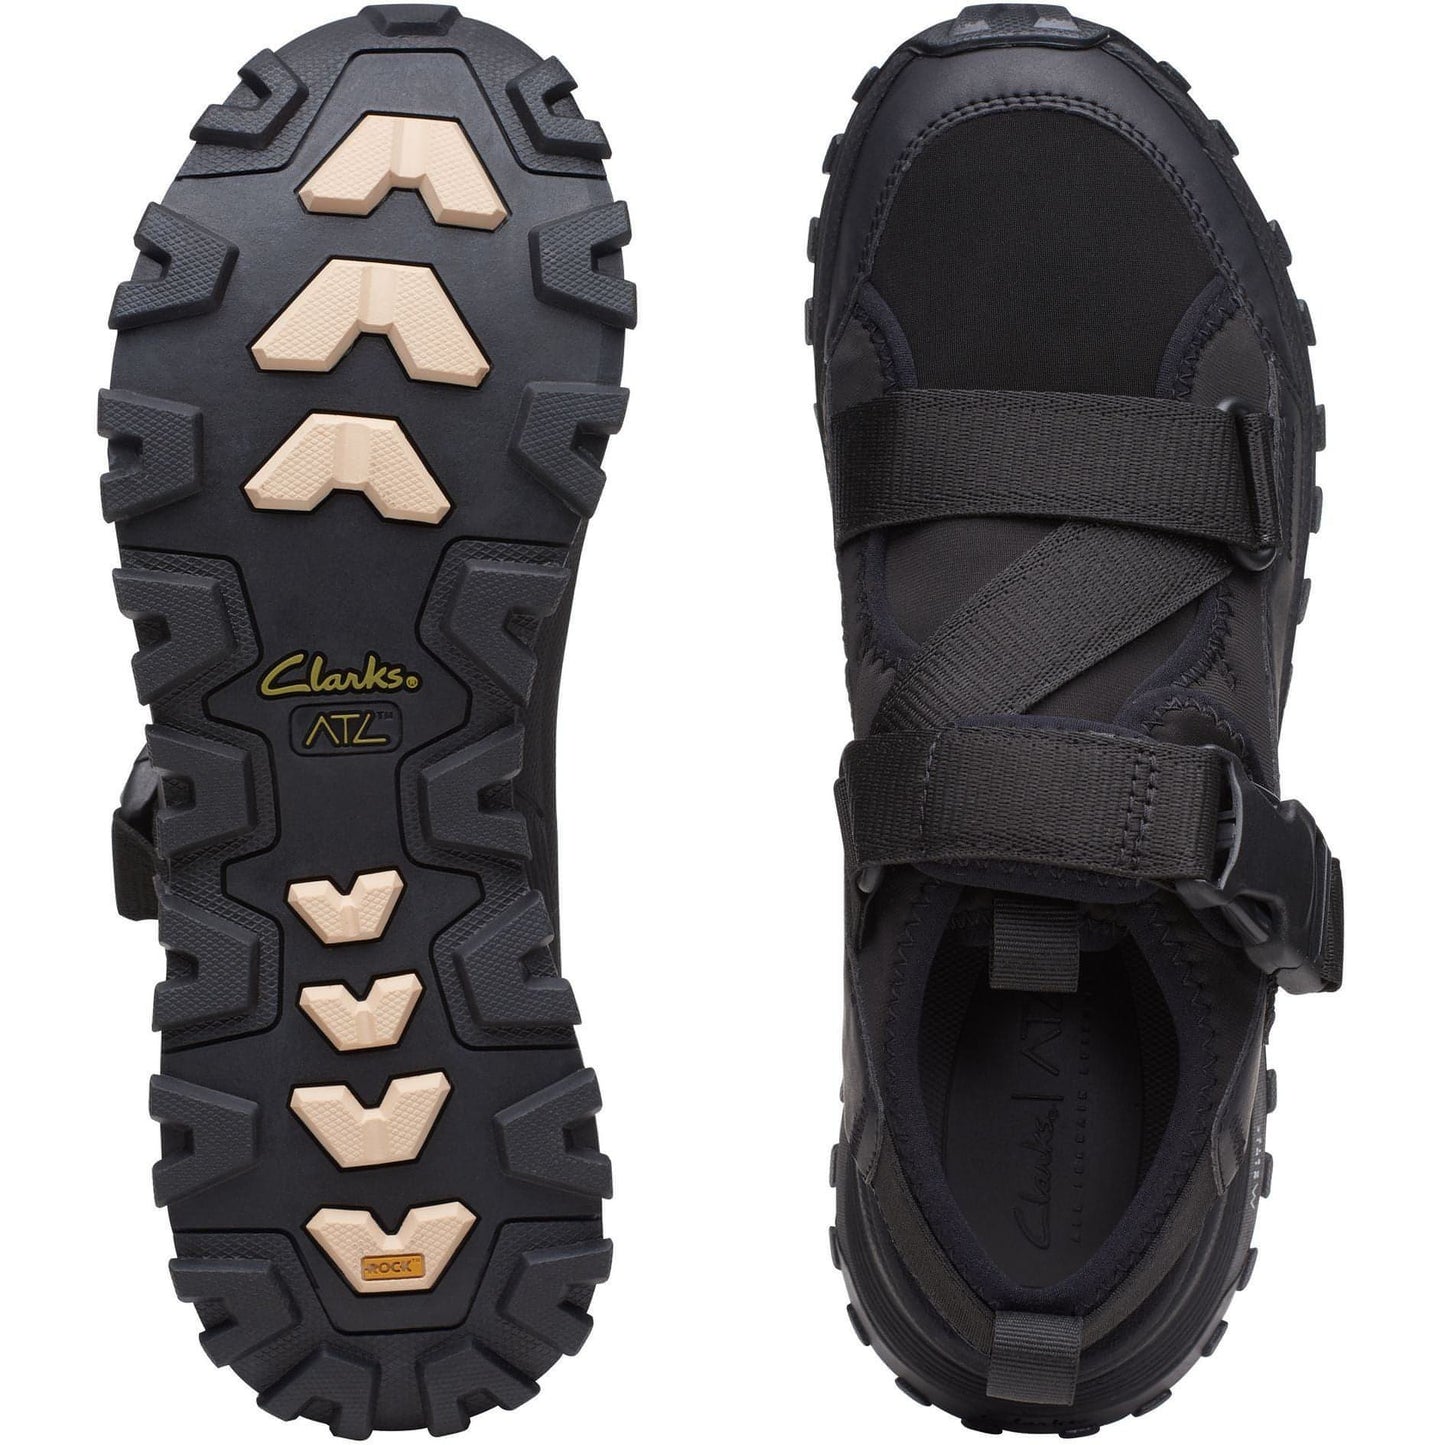 CLARKS moteriškos juodos basutės ATLTrek Strap Sandals